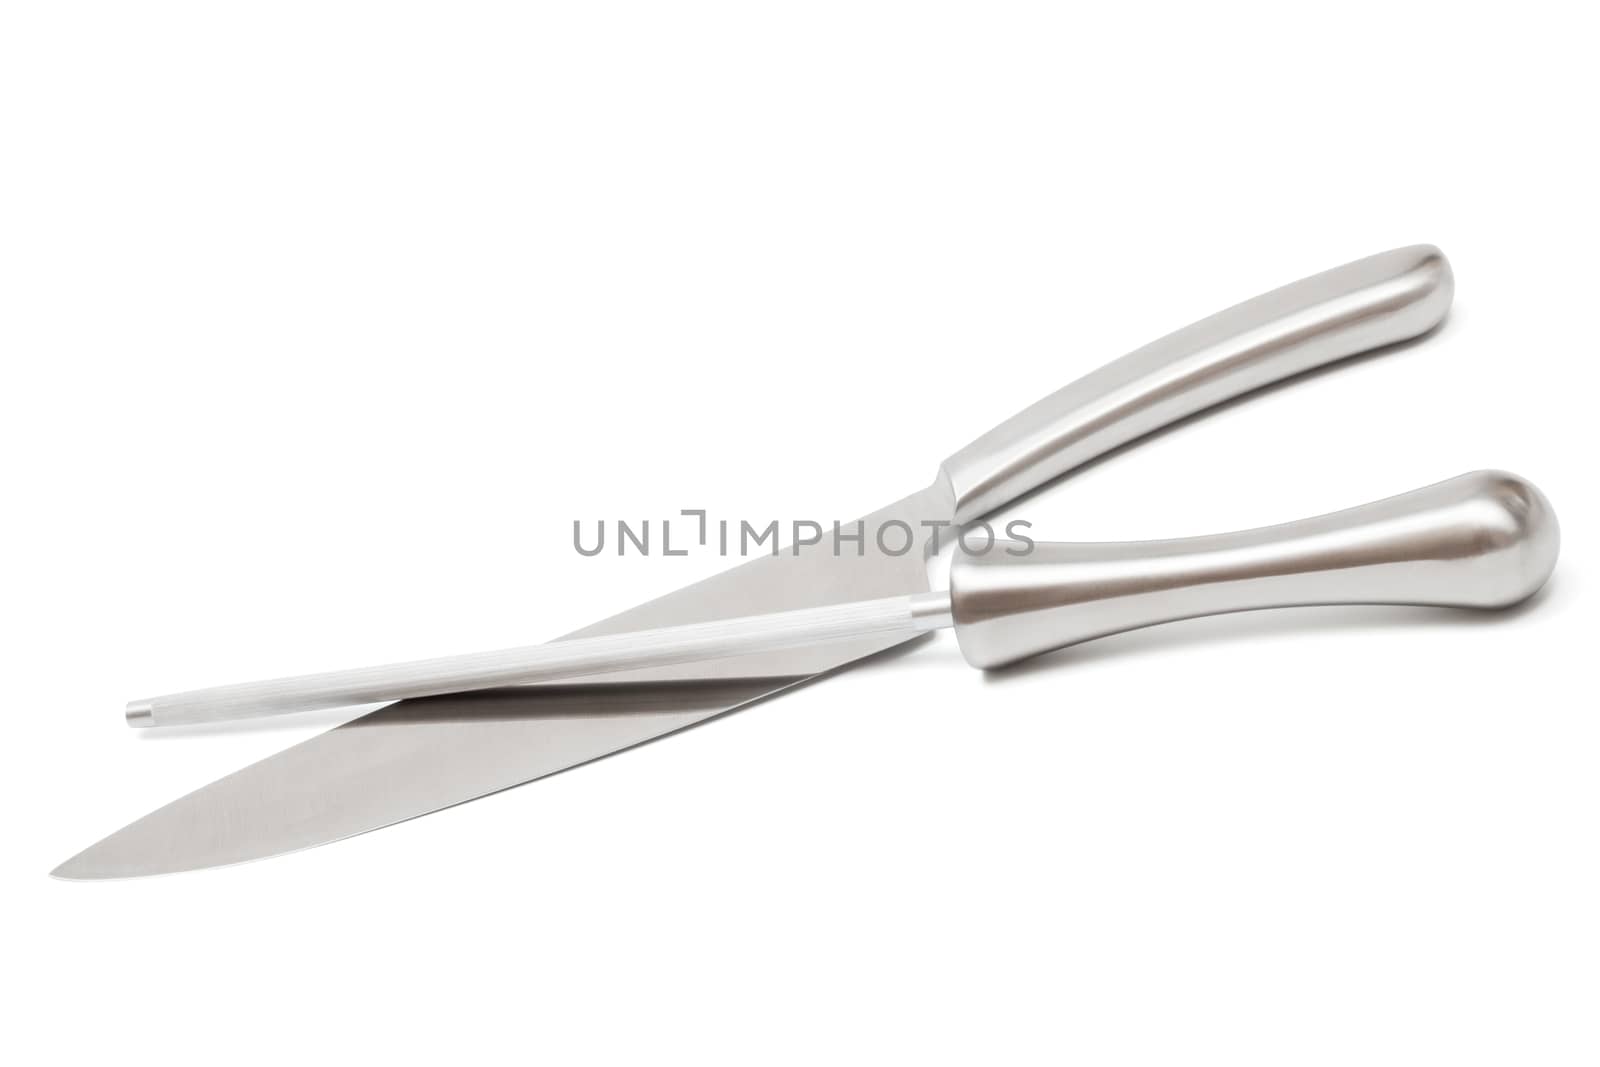 steel kitchen knife on a white background